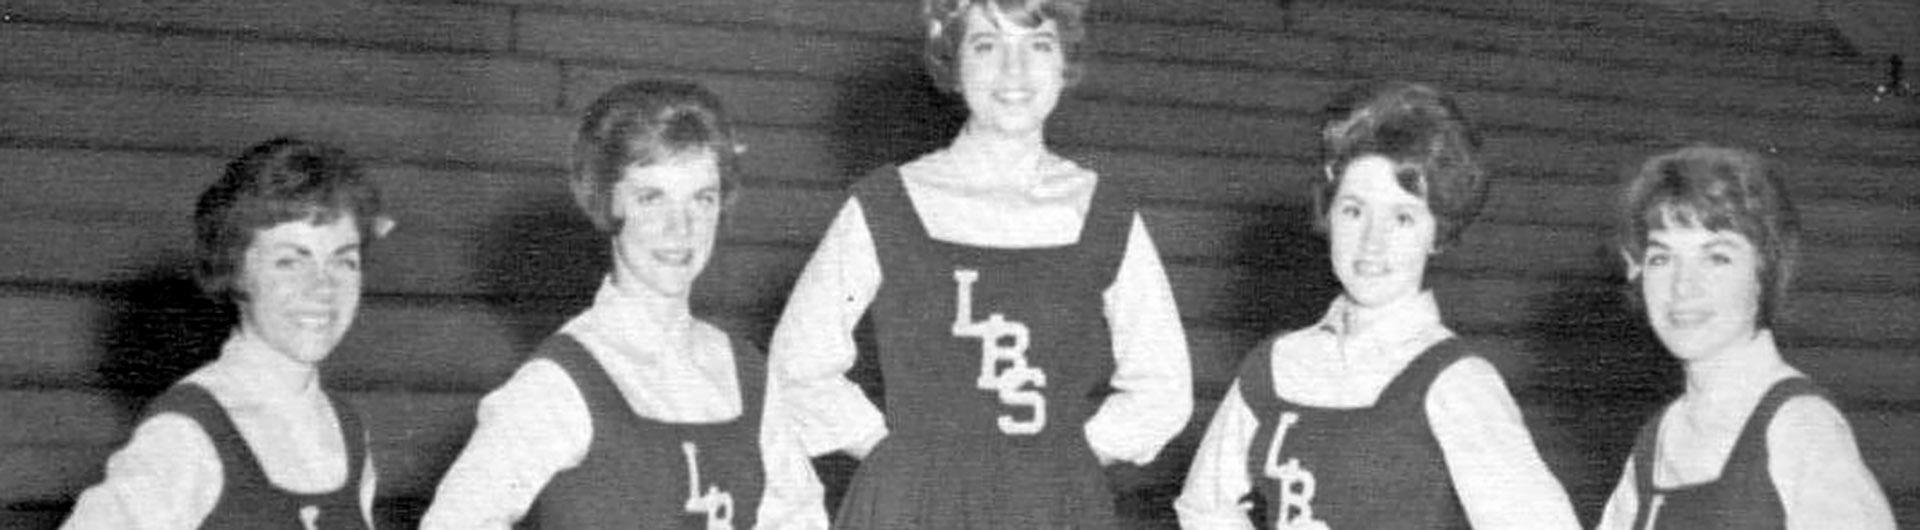 1960's campus image, school cheerleaders